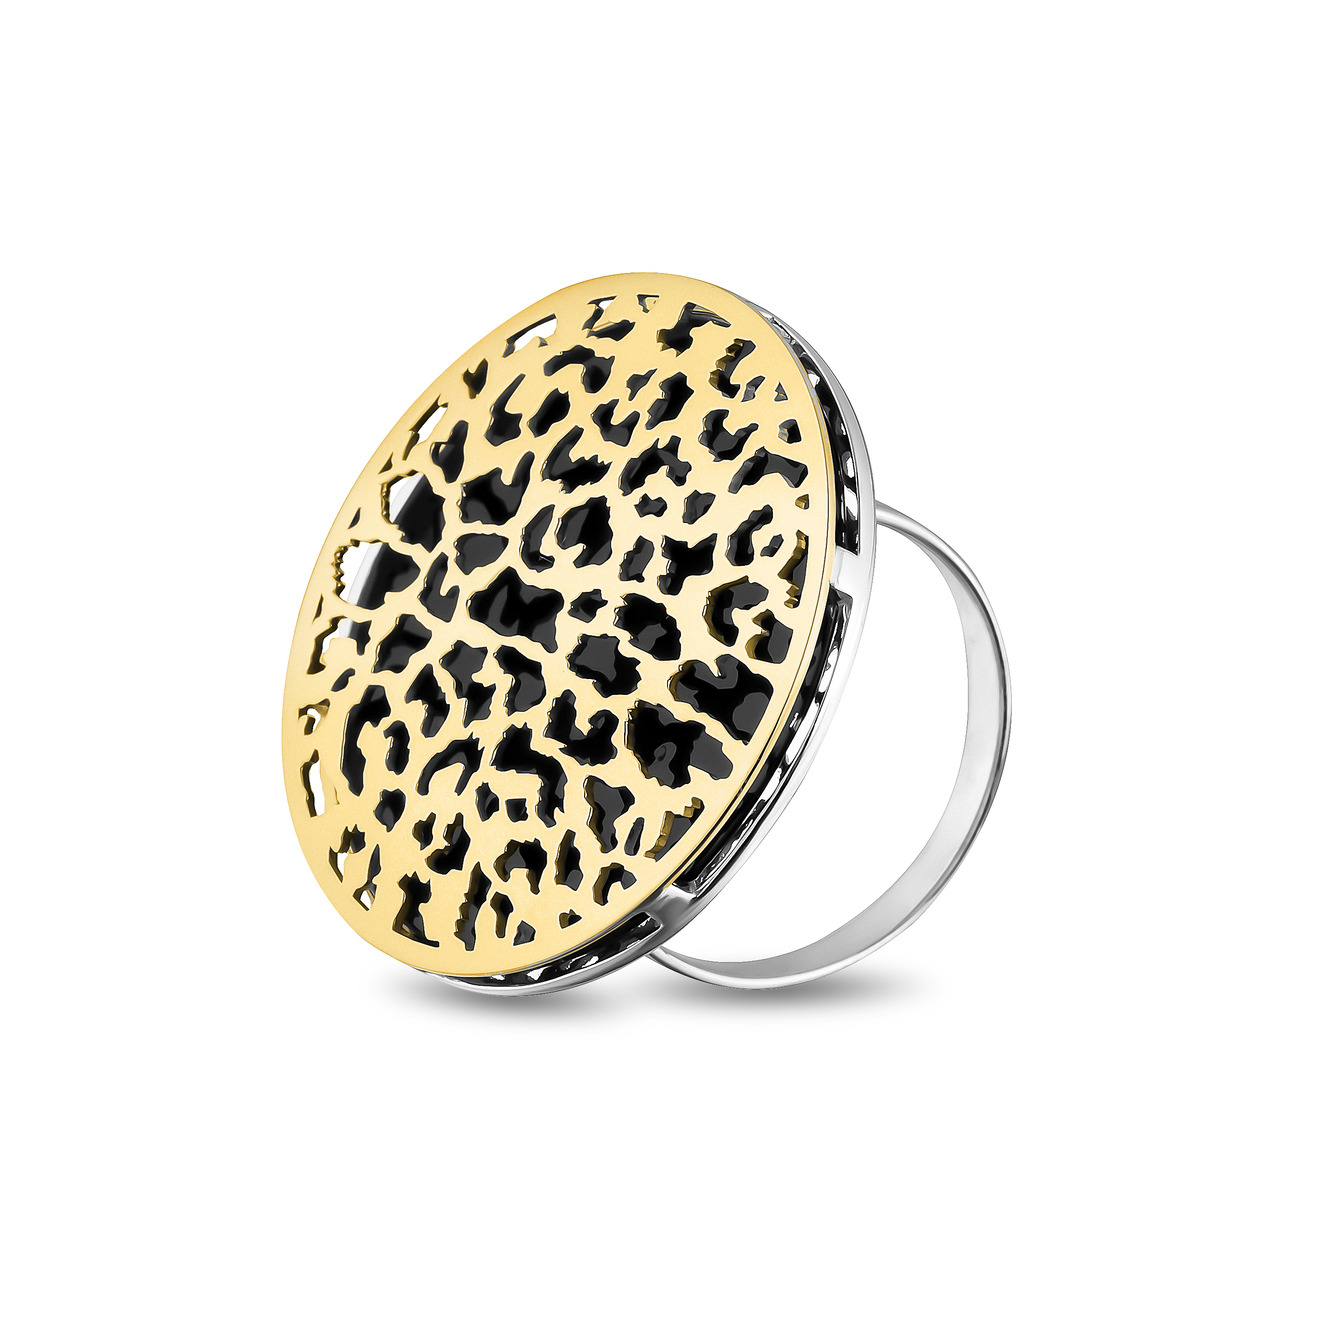 LUTA Jewelry Большое позолоченное кольцо из серебра c леопардовым узором luta jewelry подвижное кольцо клевер из серебра